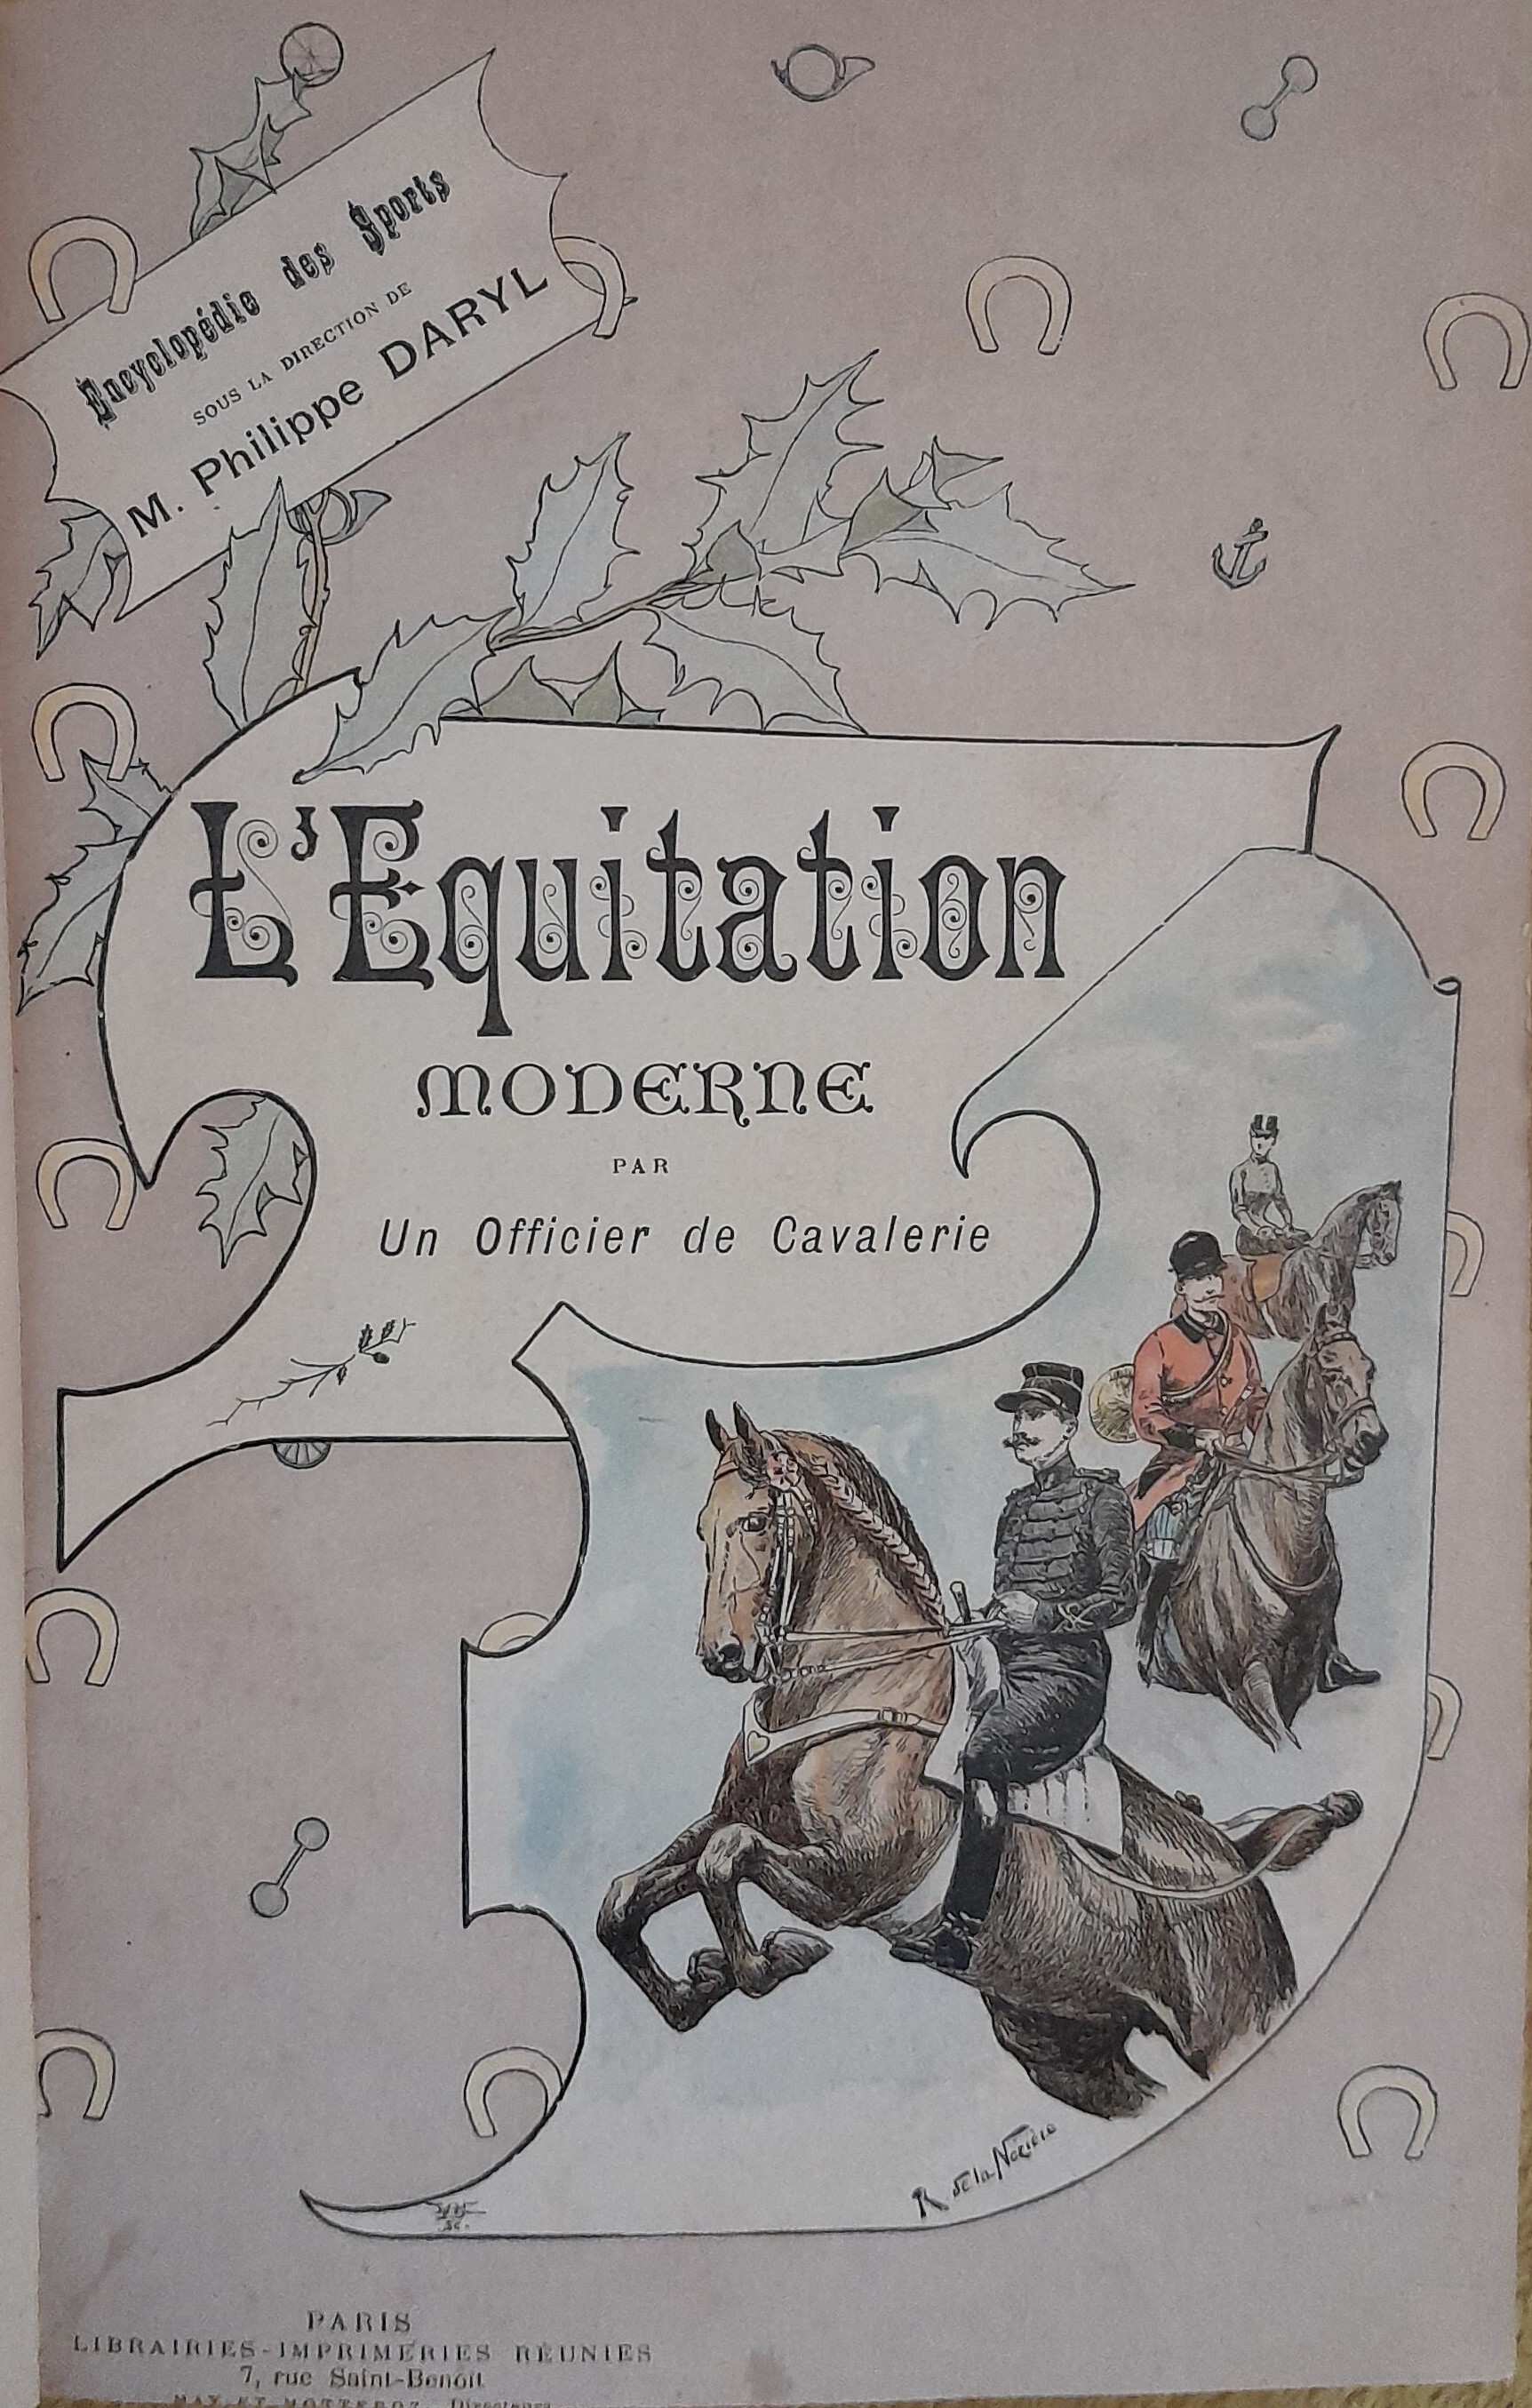 Ebook L'Équitation moderne par Philippe Daryl - 7Switch